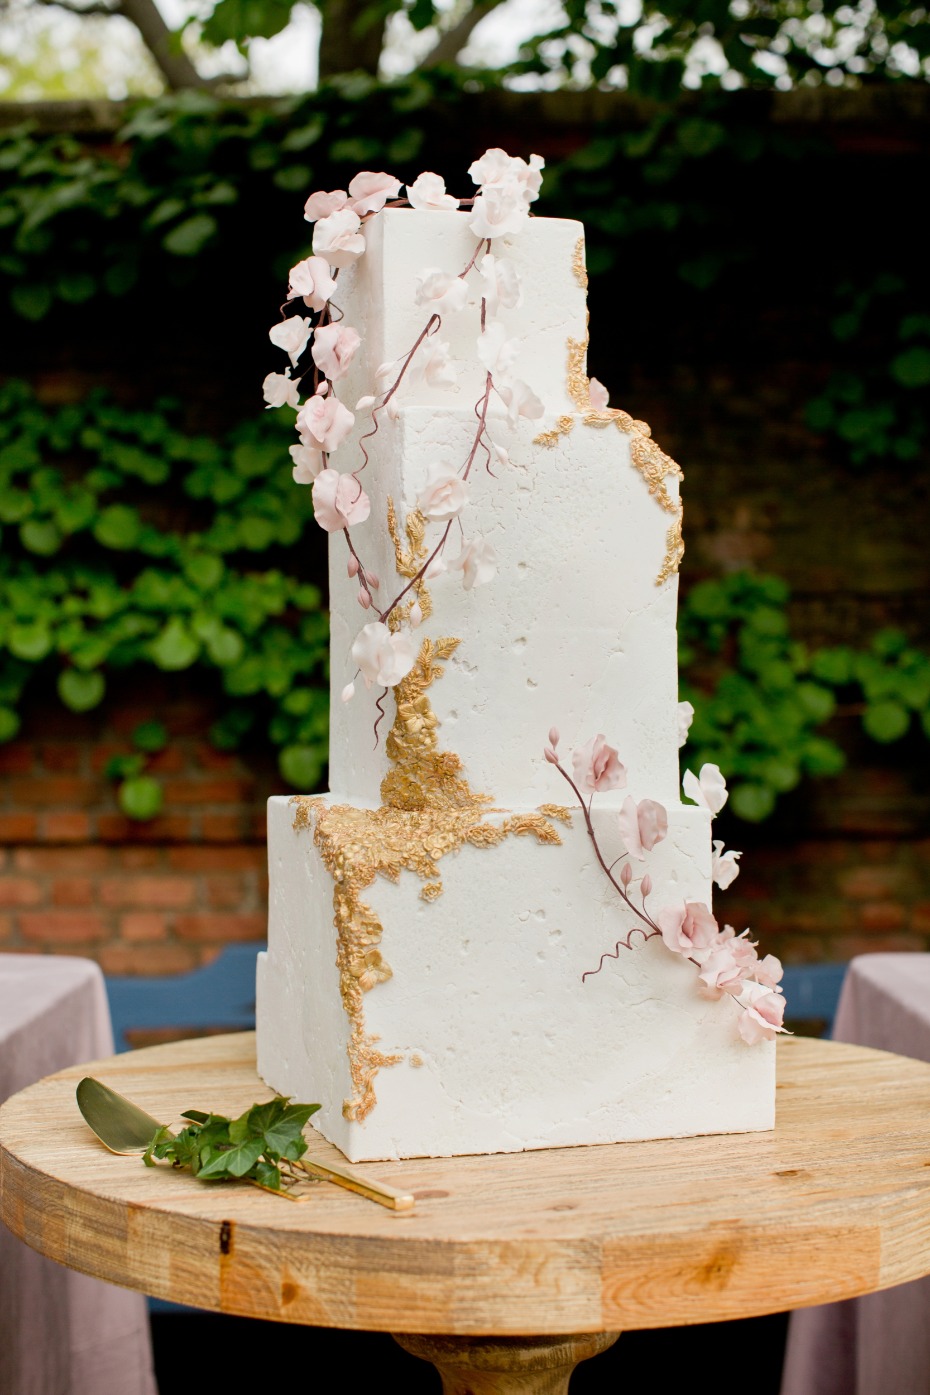 Asymmetrical wedding cake with aged rough stone fondant